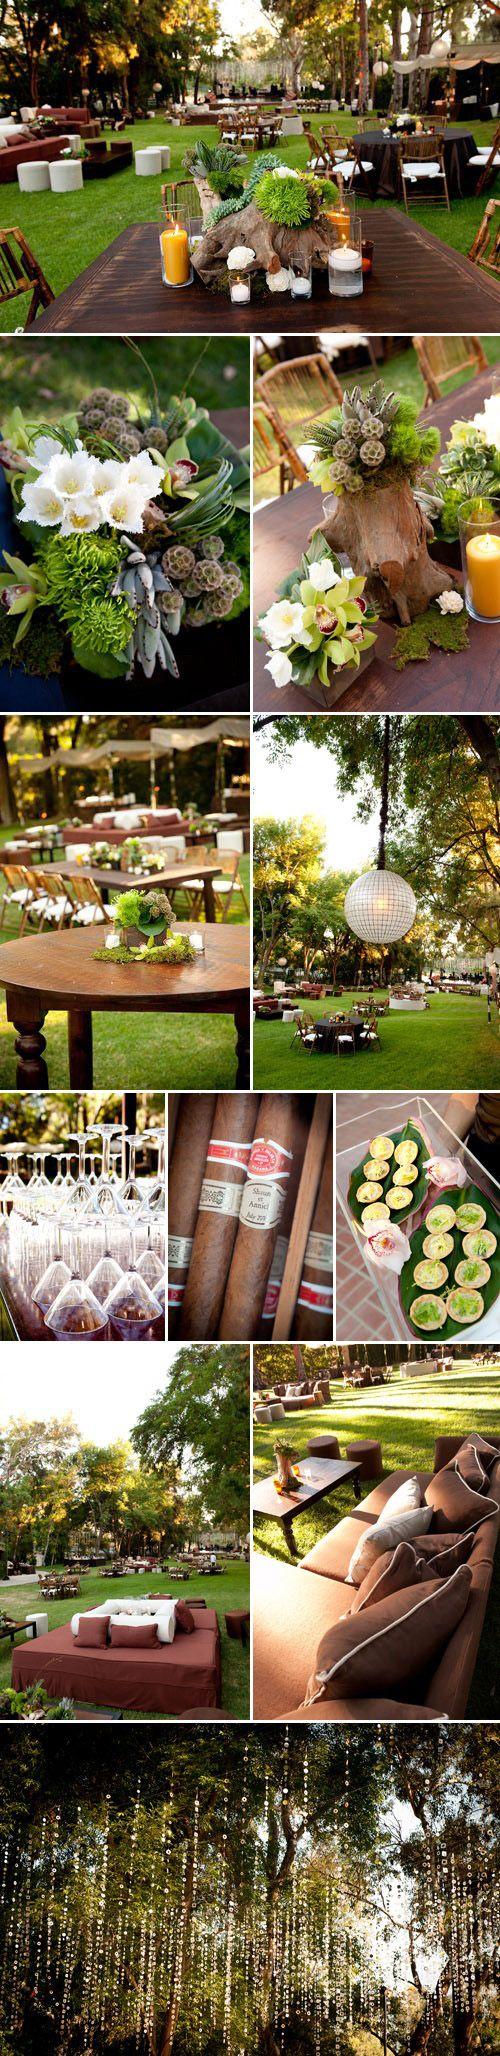 Wedding - Rustic Woodland Garden Party Decor